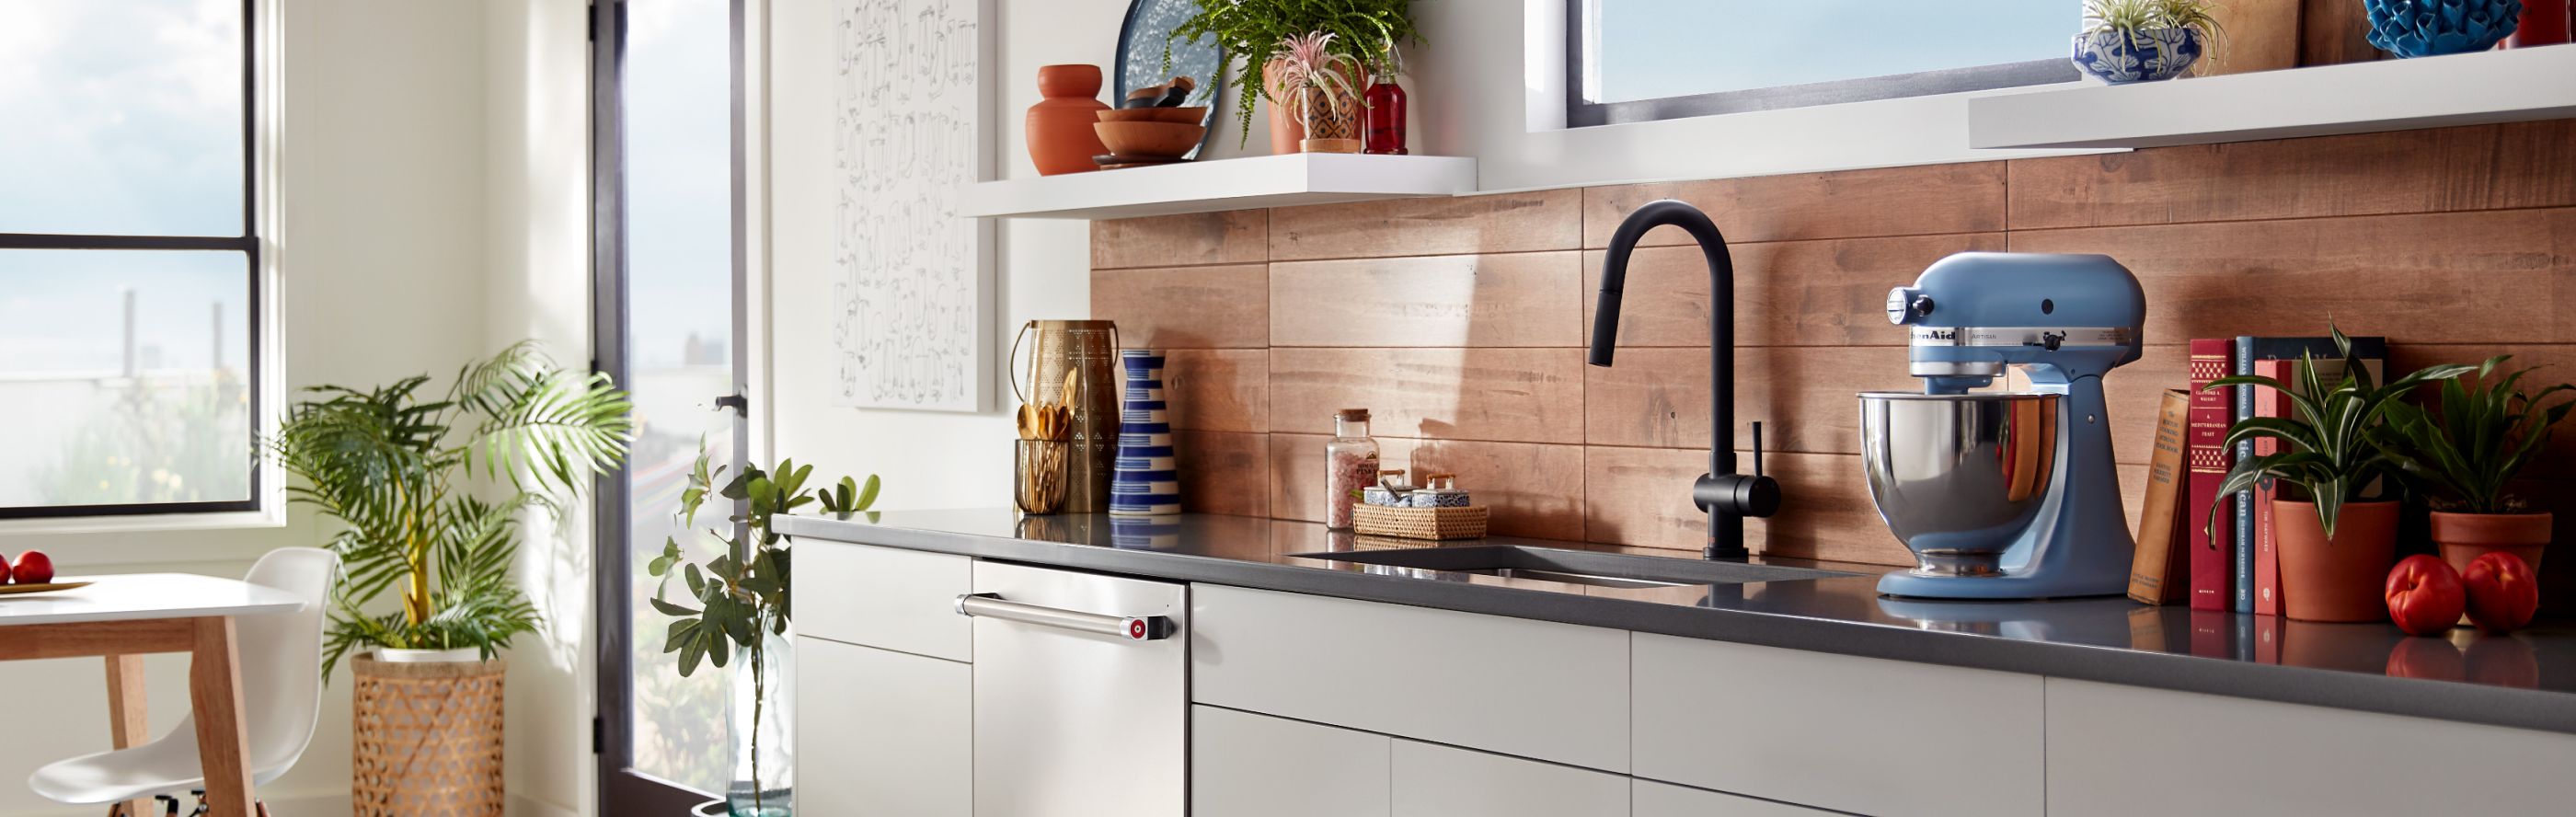 Blue KitchenAid® stand mixer on countertop with wood panel backsplash